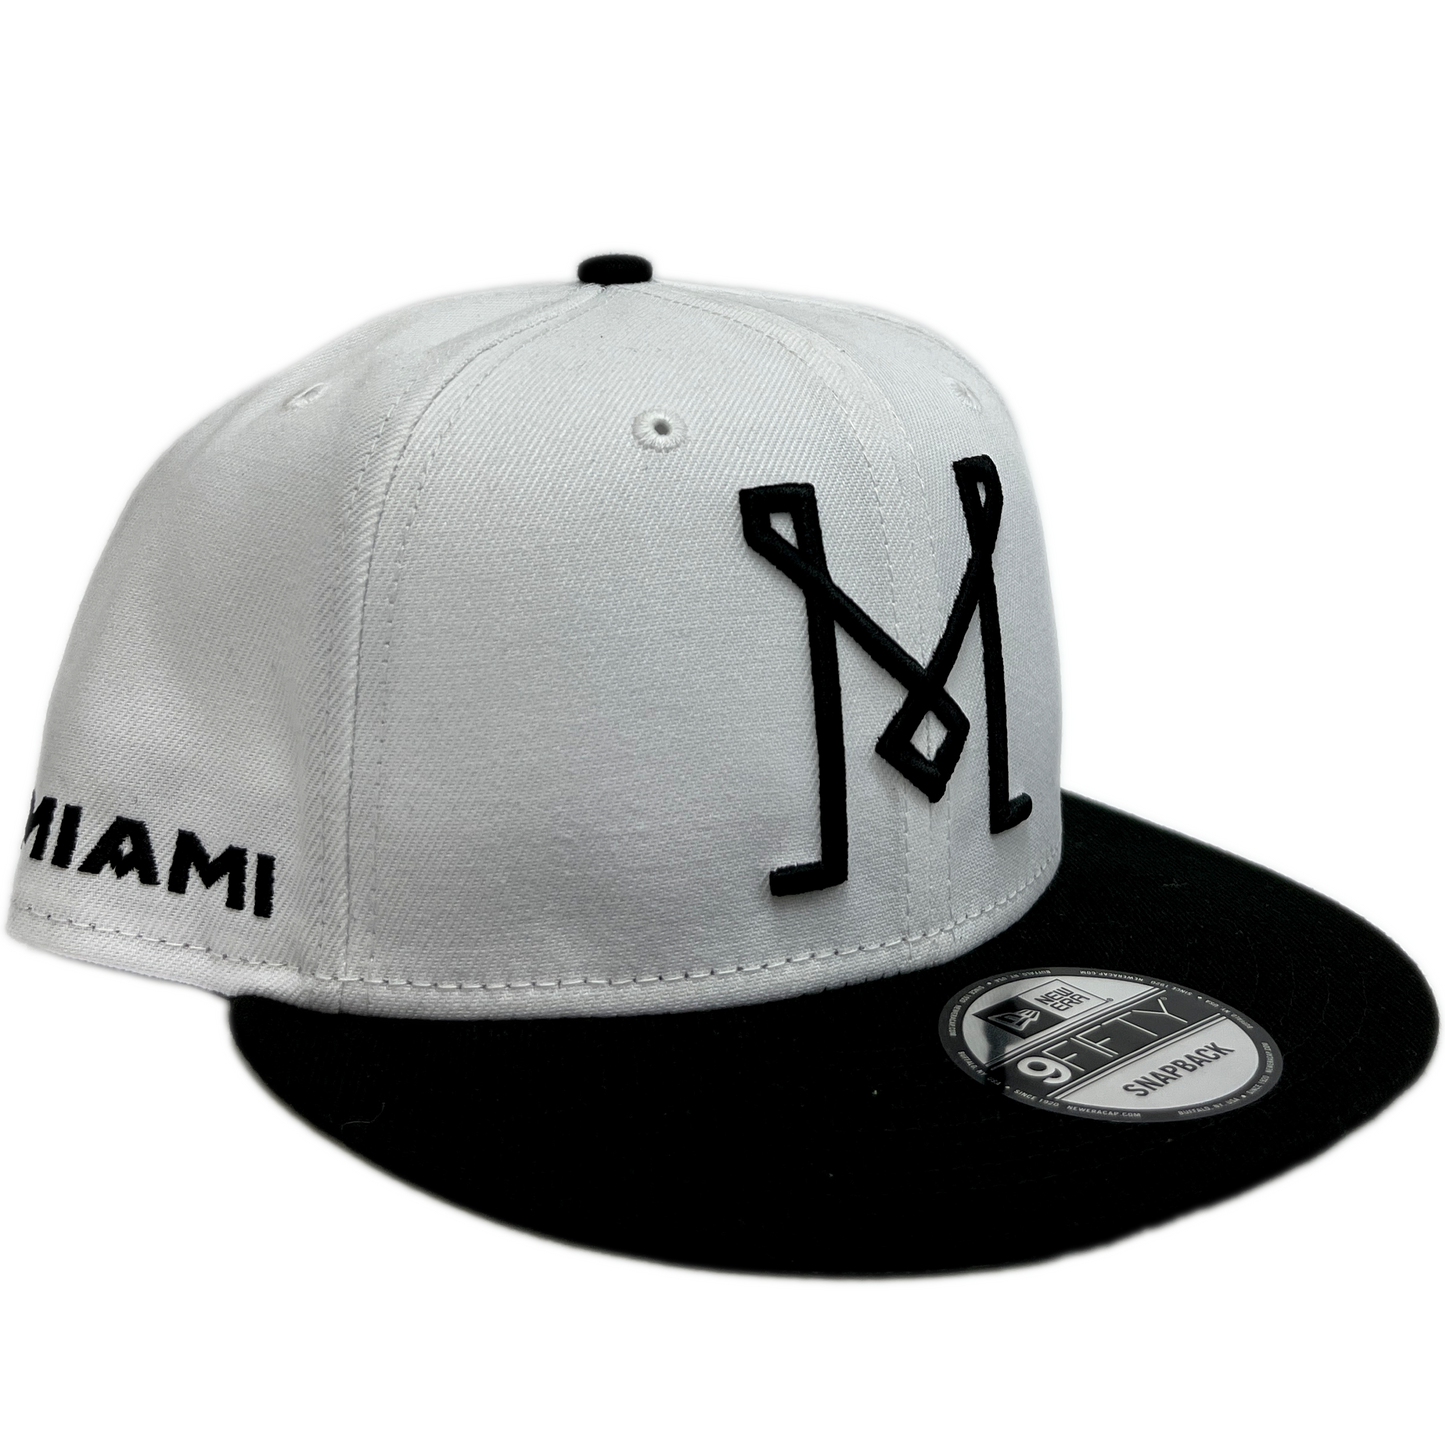 New Era Inter Miami 9FIFTY Adjustable Hat - White/ Black